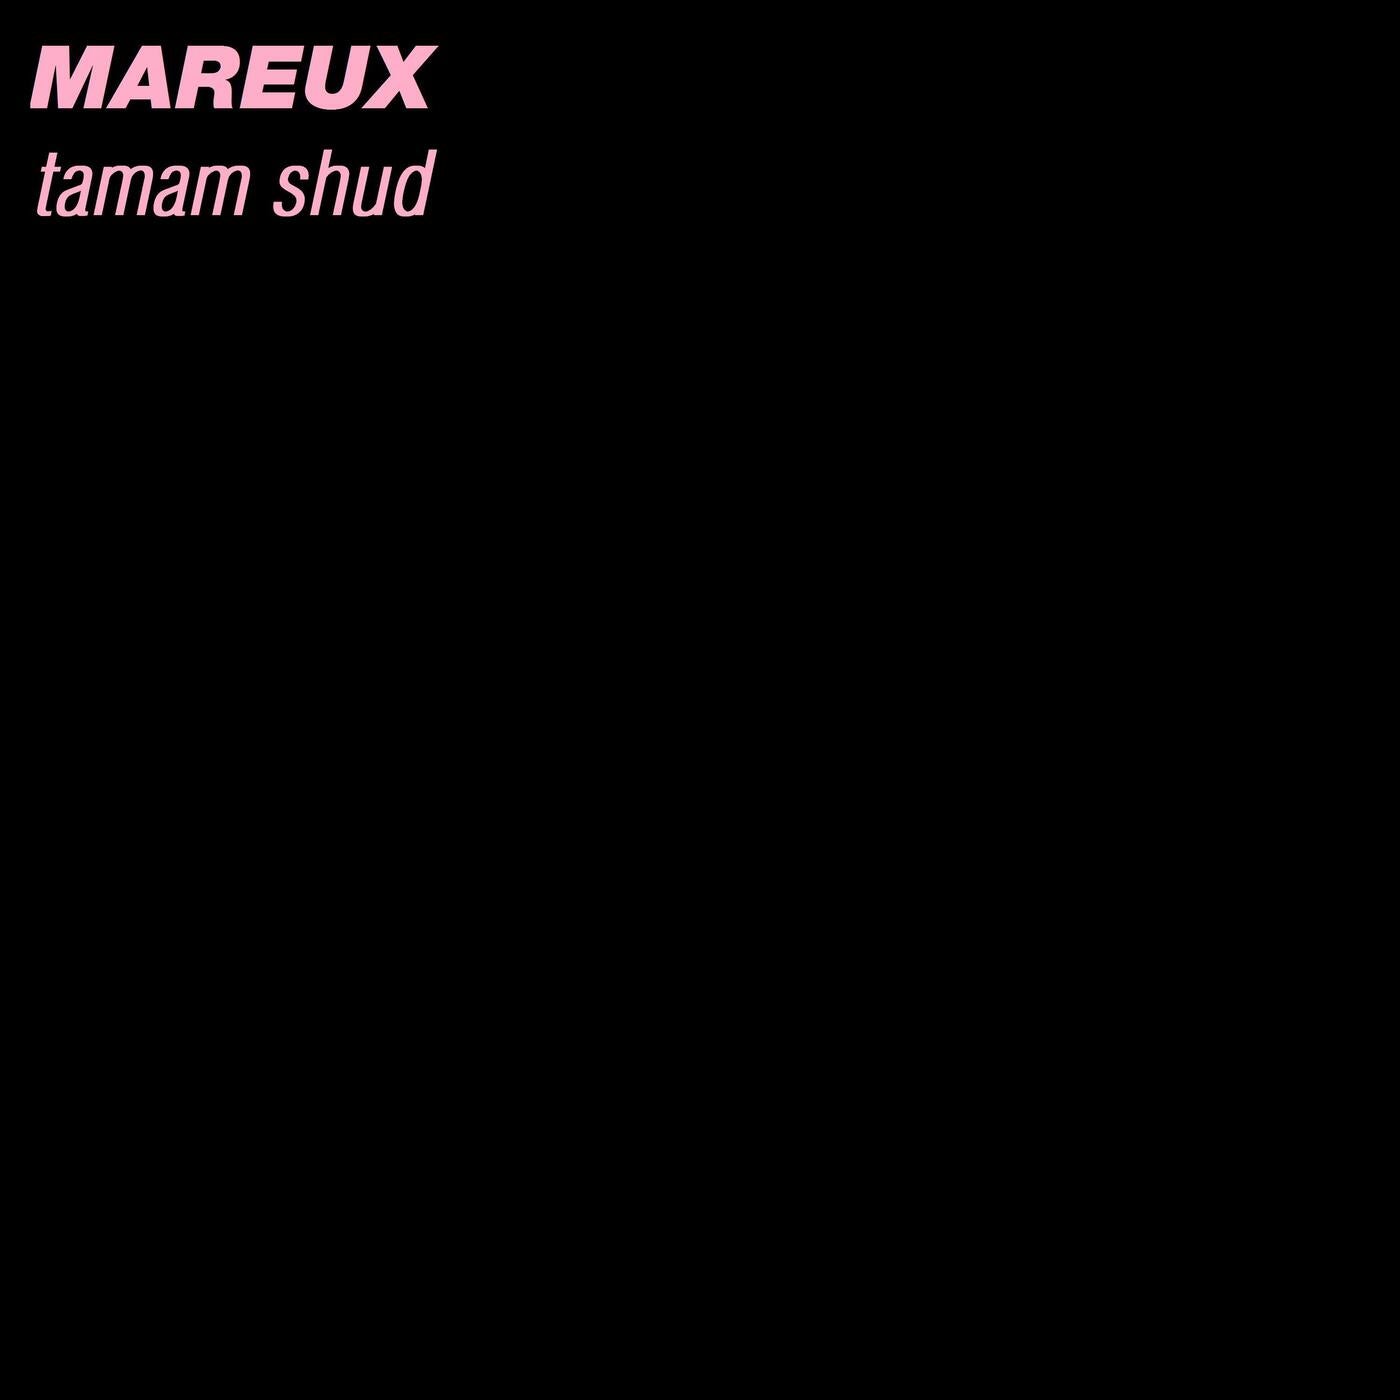 Shud (Original Mix) Mareux on Beatport